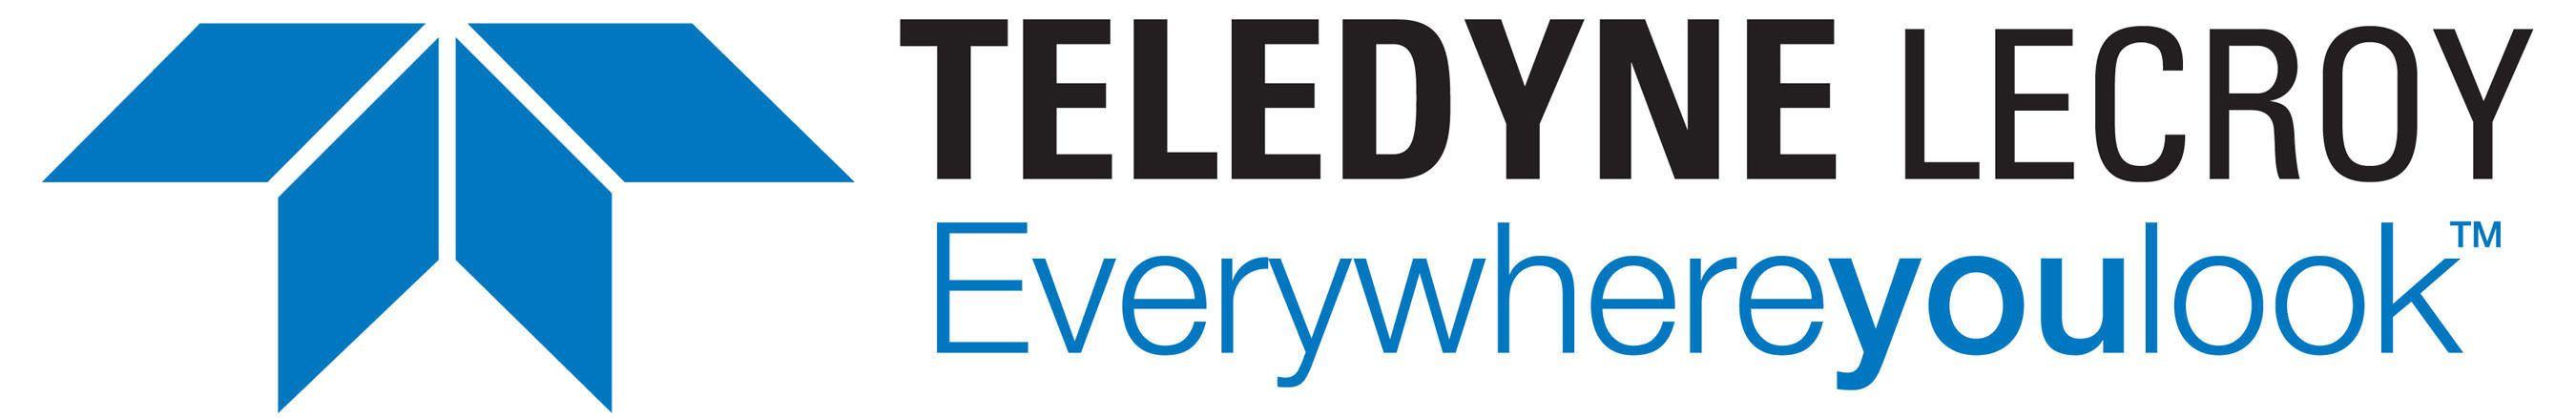 PCIe Logo - Teledyne LeCroy Announces New PCIe® External Cable 3.0 Interposer ...